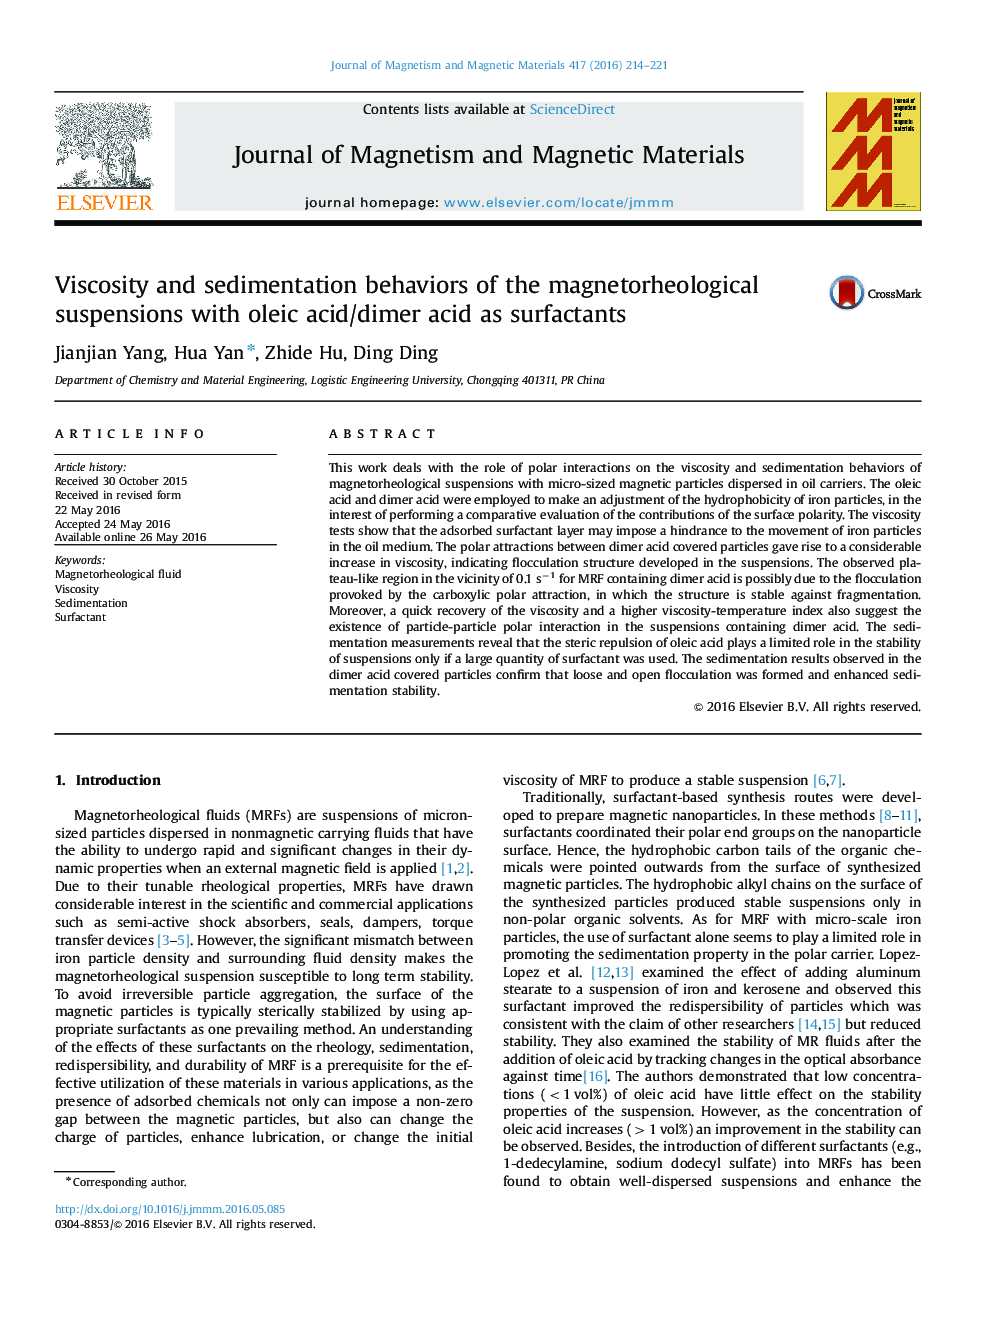 Viscosity and sedimentation behaviors of the magnetorheological suspensions with oleic acid/dimer acid as surfactants